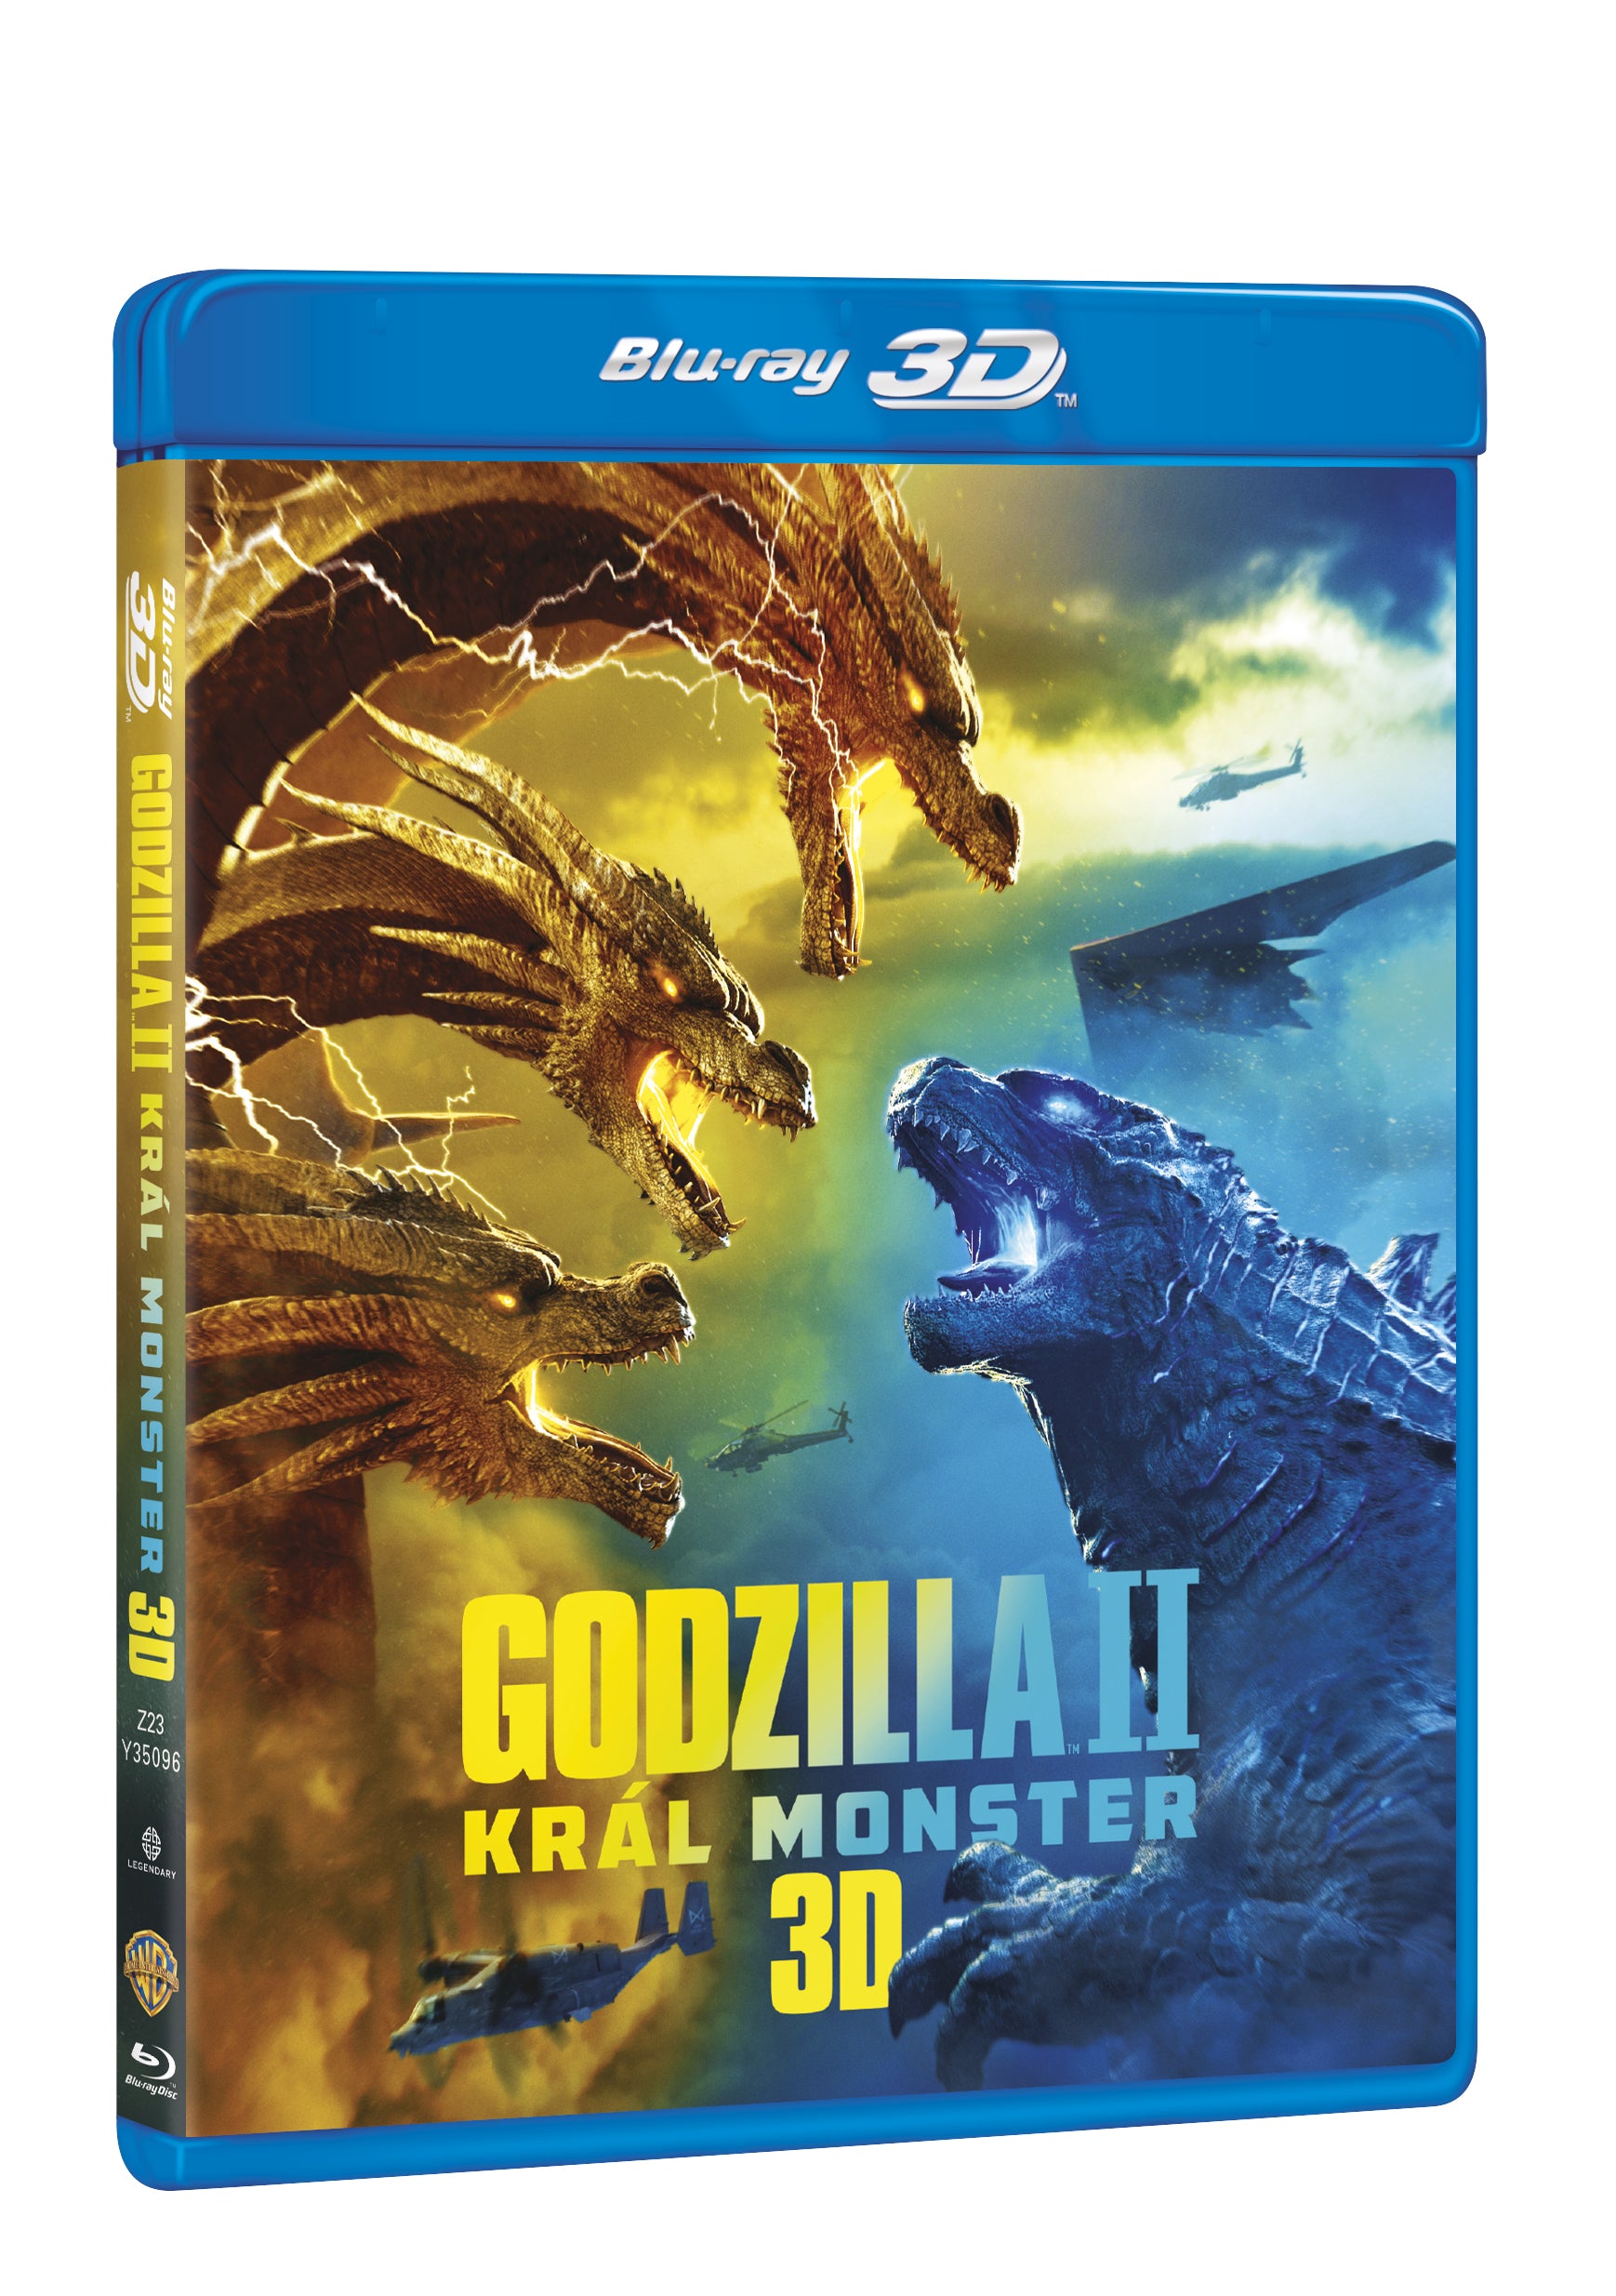 Godzilla II Kral monster 2BD (3D+2D) / Godzilla: King of the Monsters - Czech version